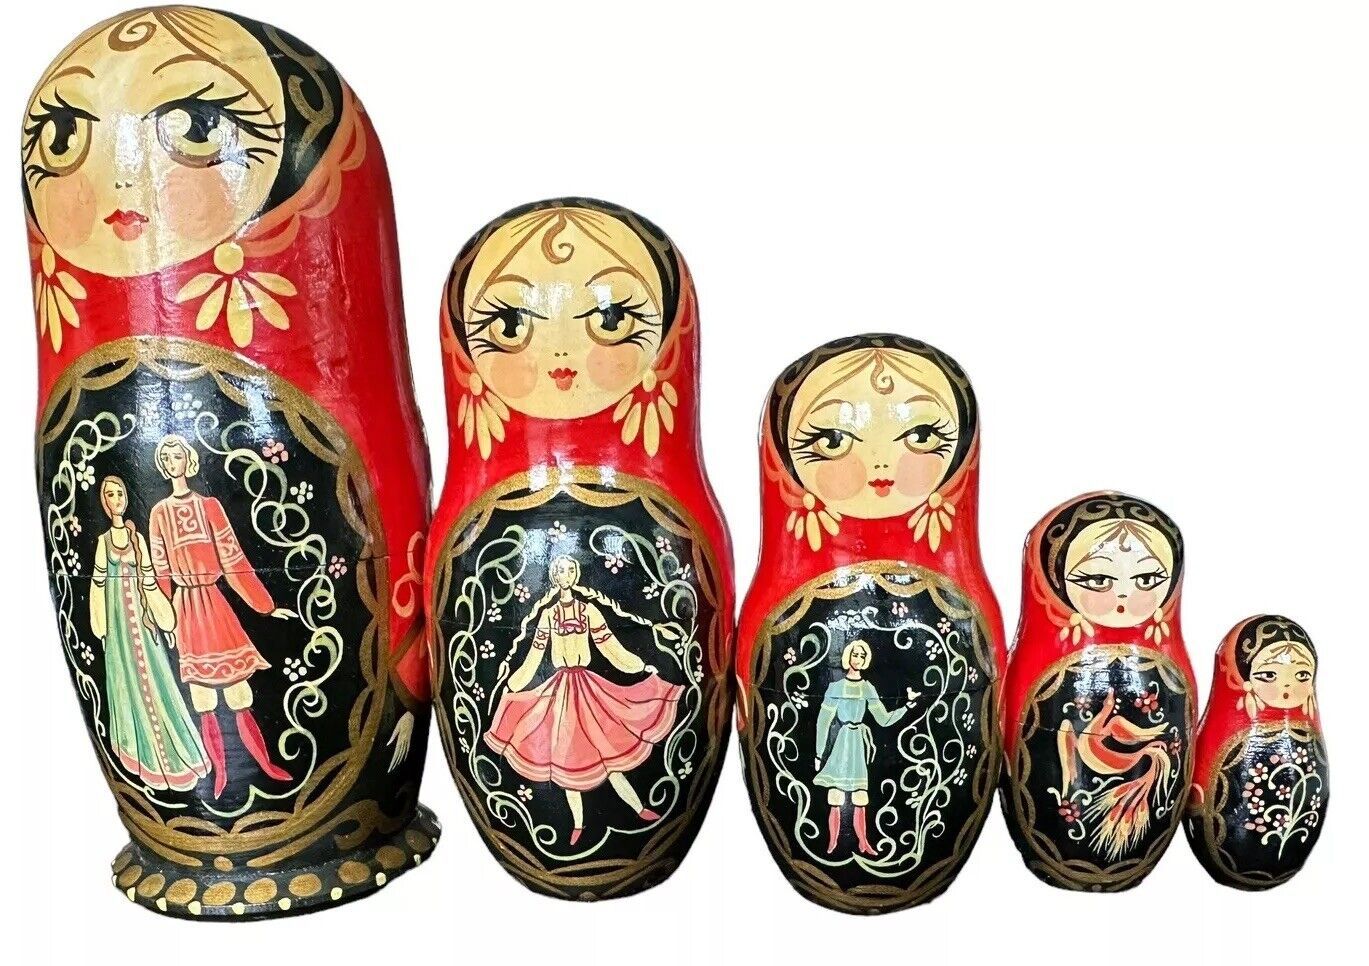 VTG Matryoshka Wooden Russian Nesting Dolls Set Of Five - Incredibly Detailed